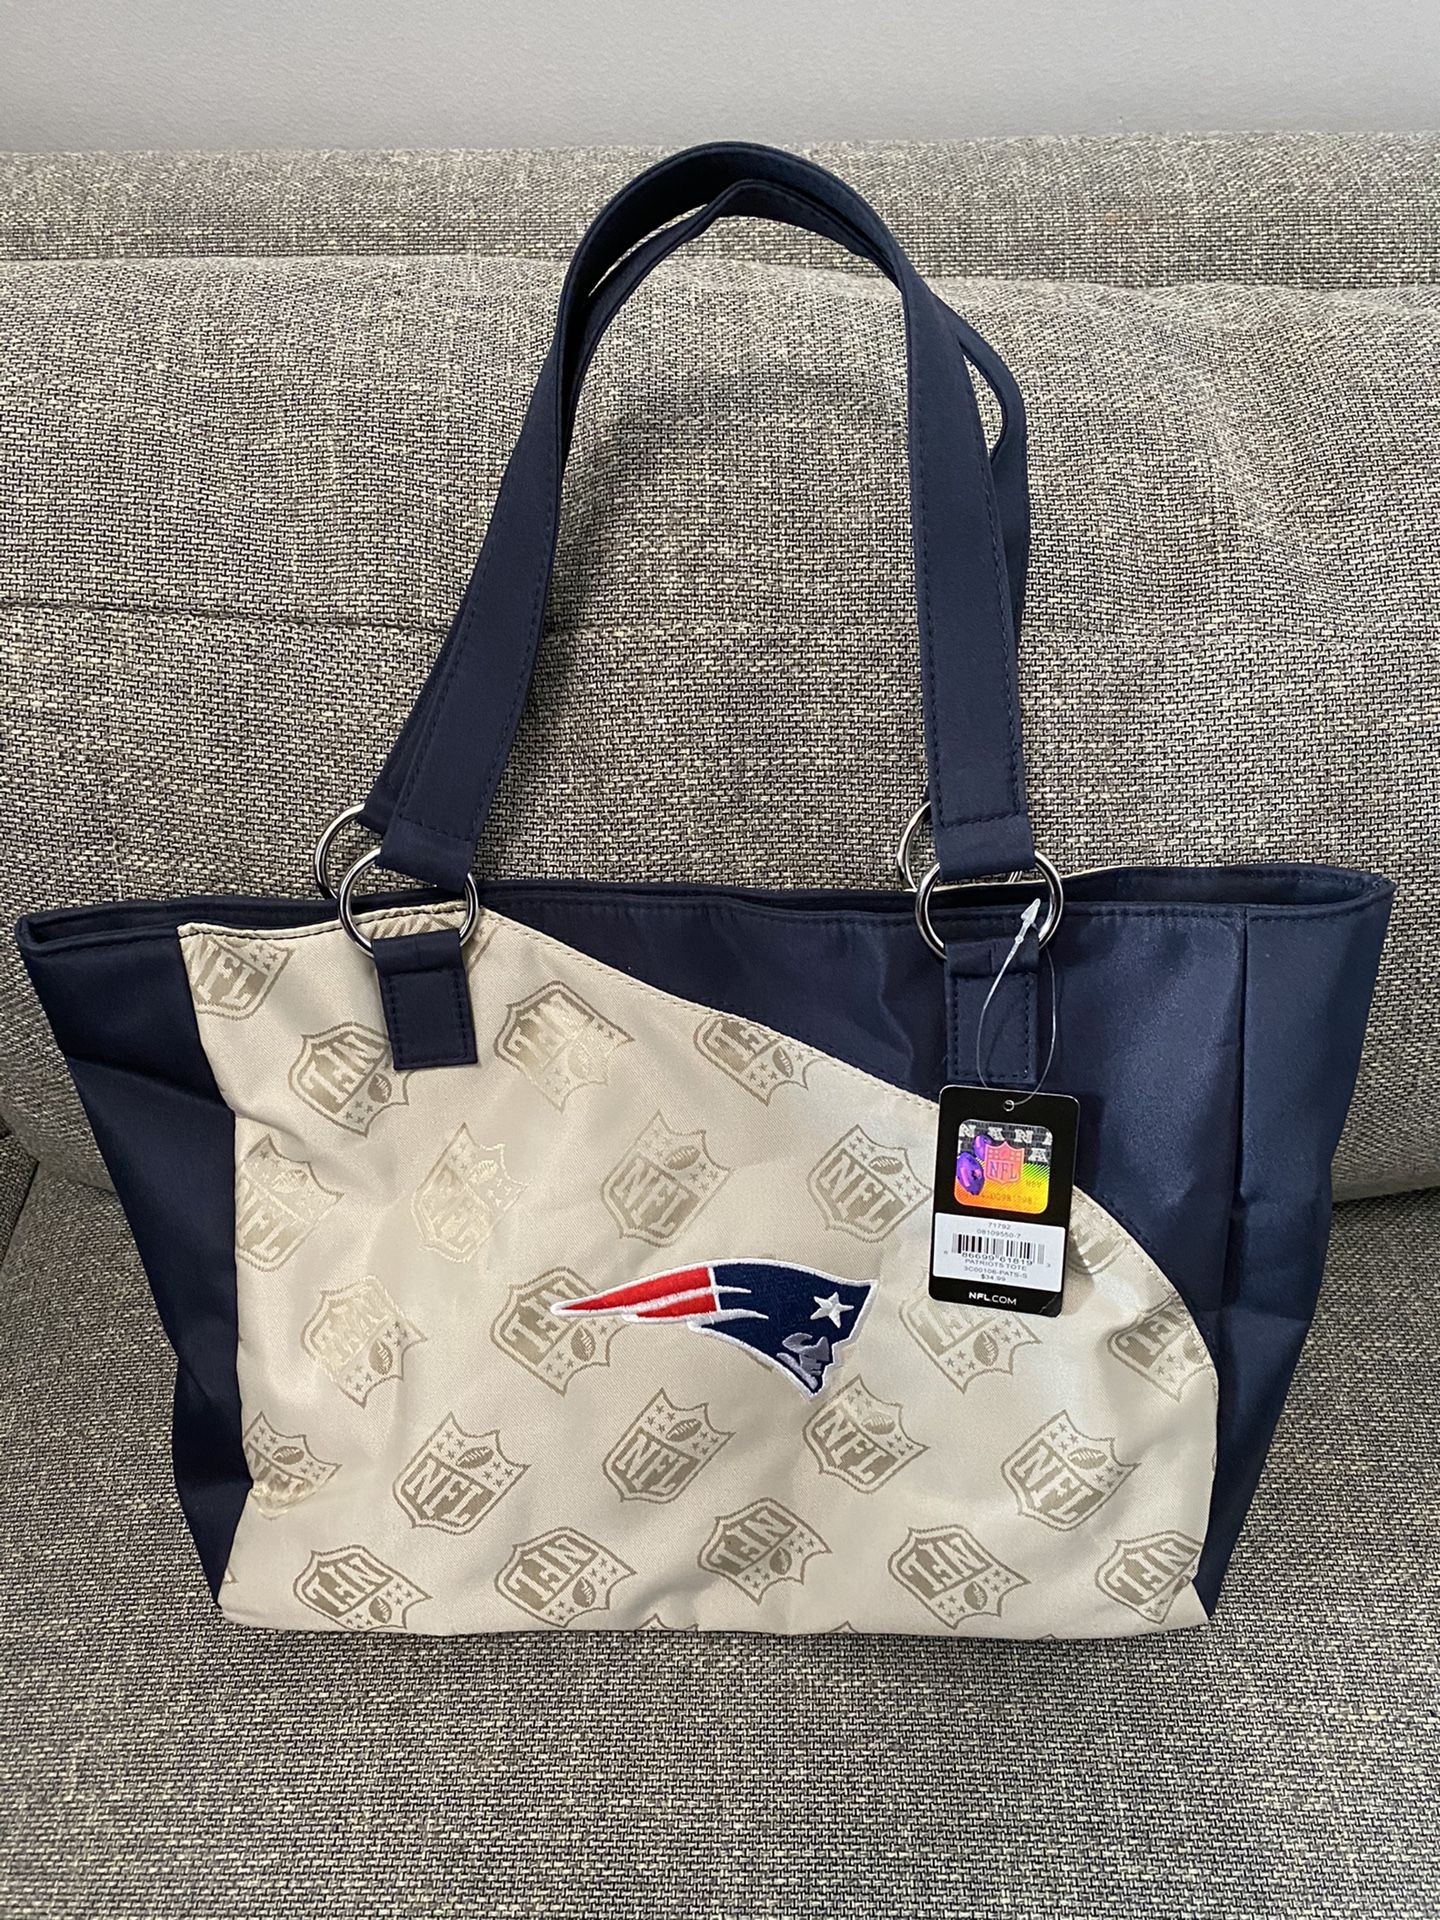 New England Patriots purse/tote bag